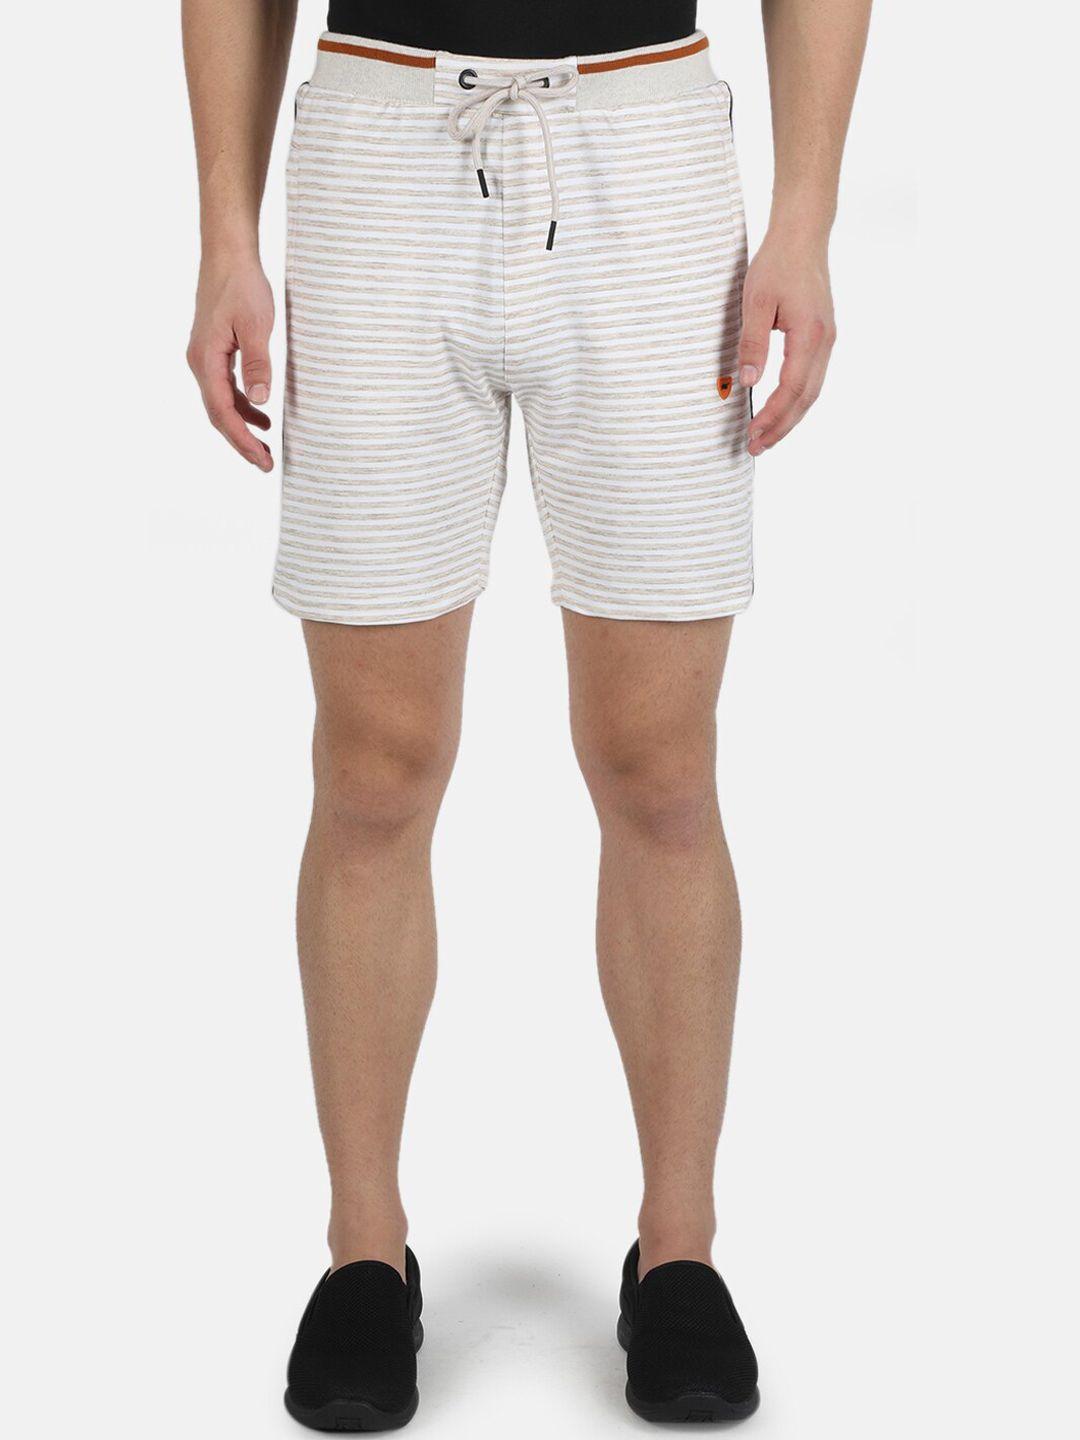 monte-carlo-men-beige-striped-shorts